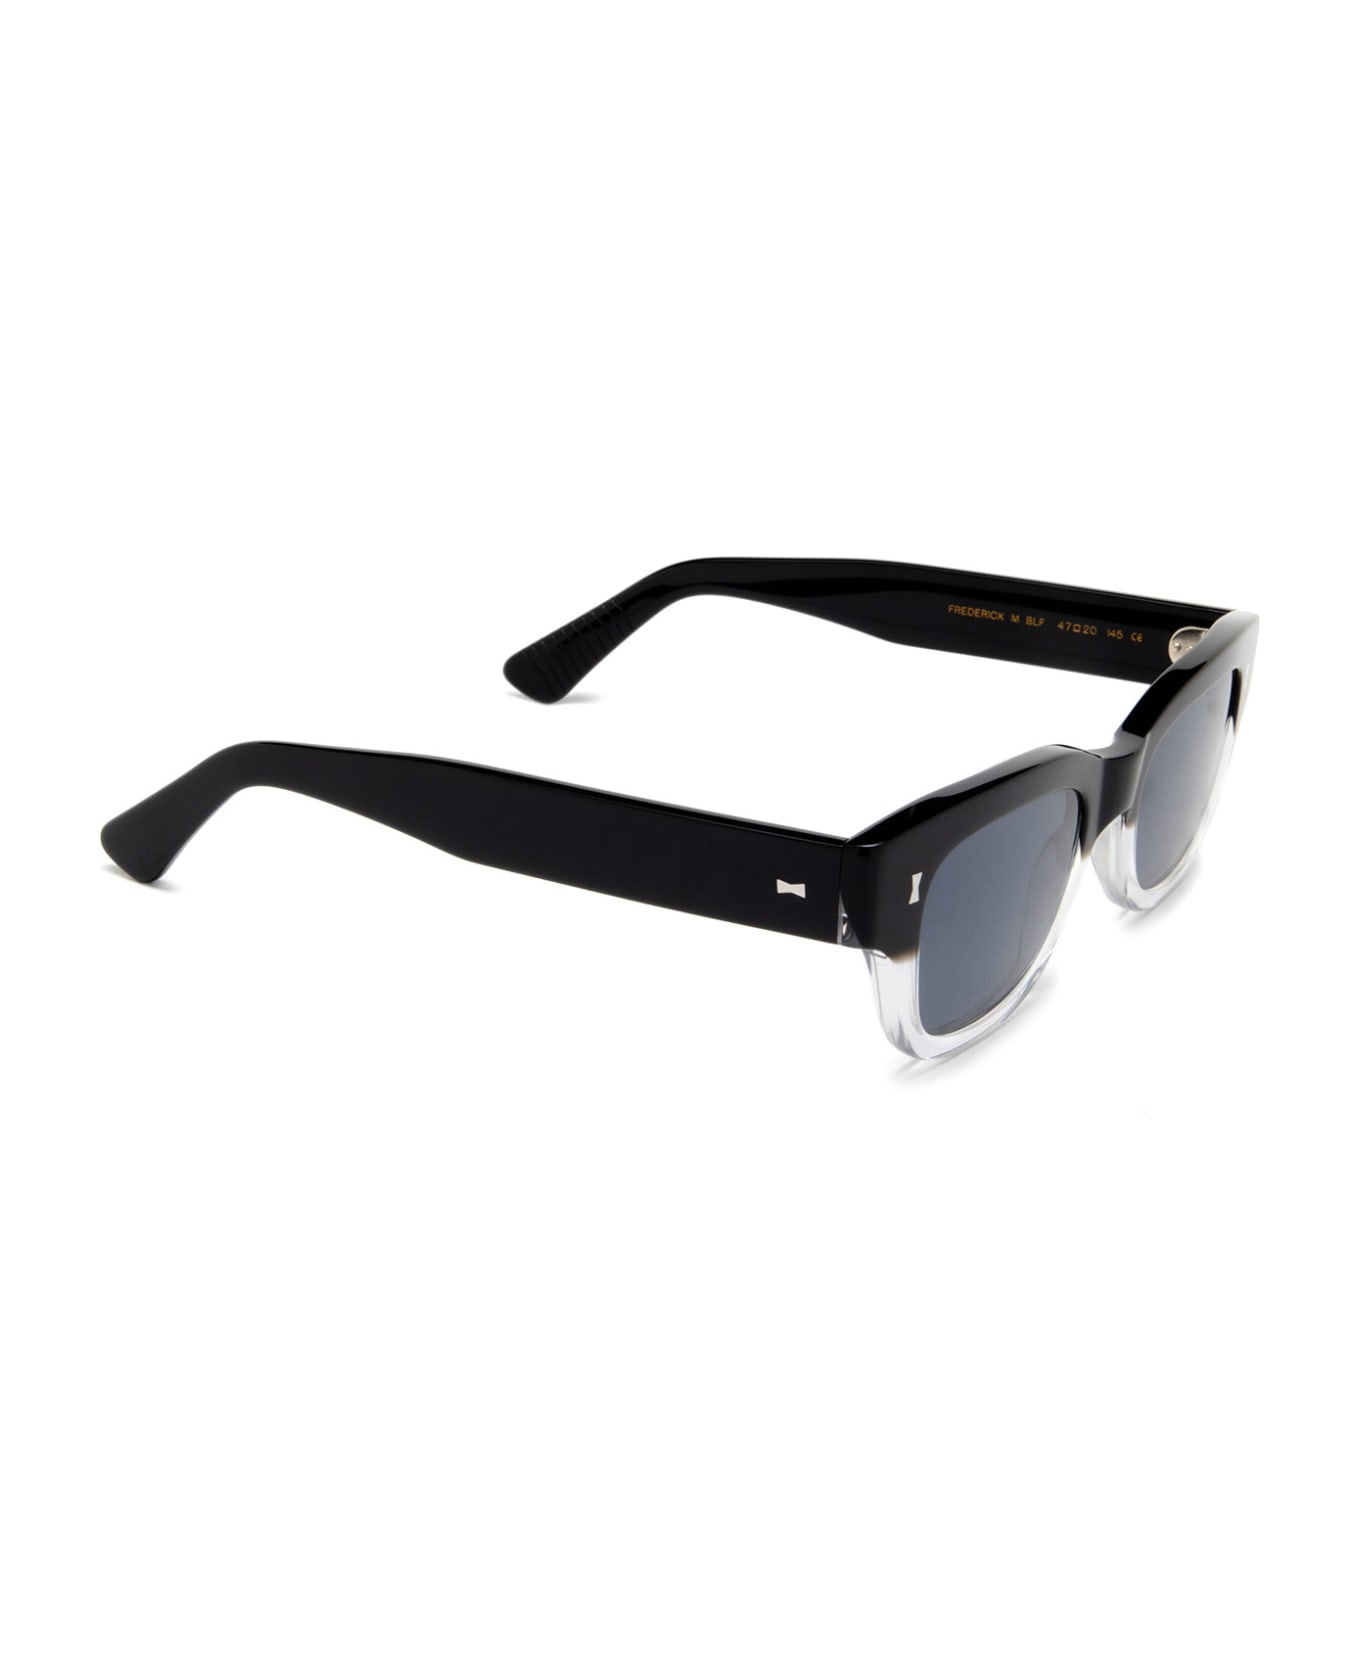 Cubitts Frederick Sun Black Fade Sunglasses - Black Fade サングラス